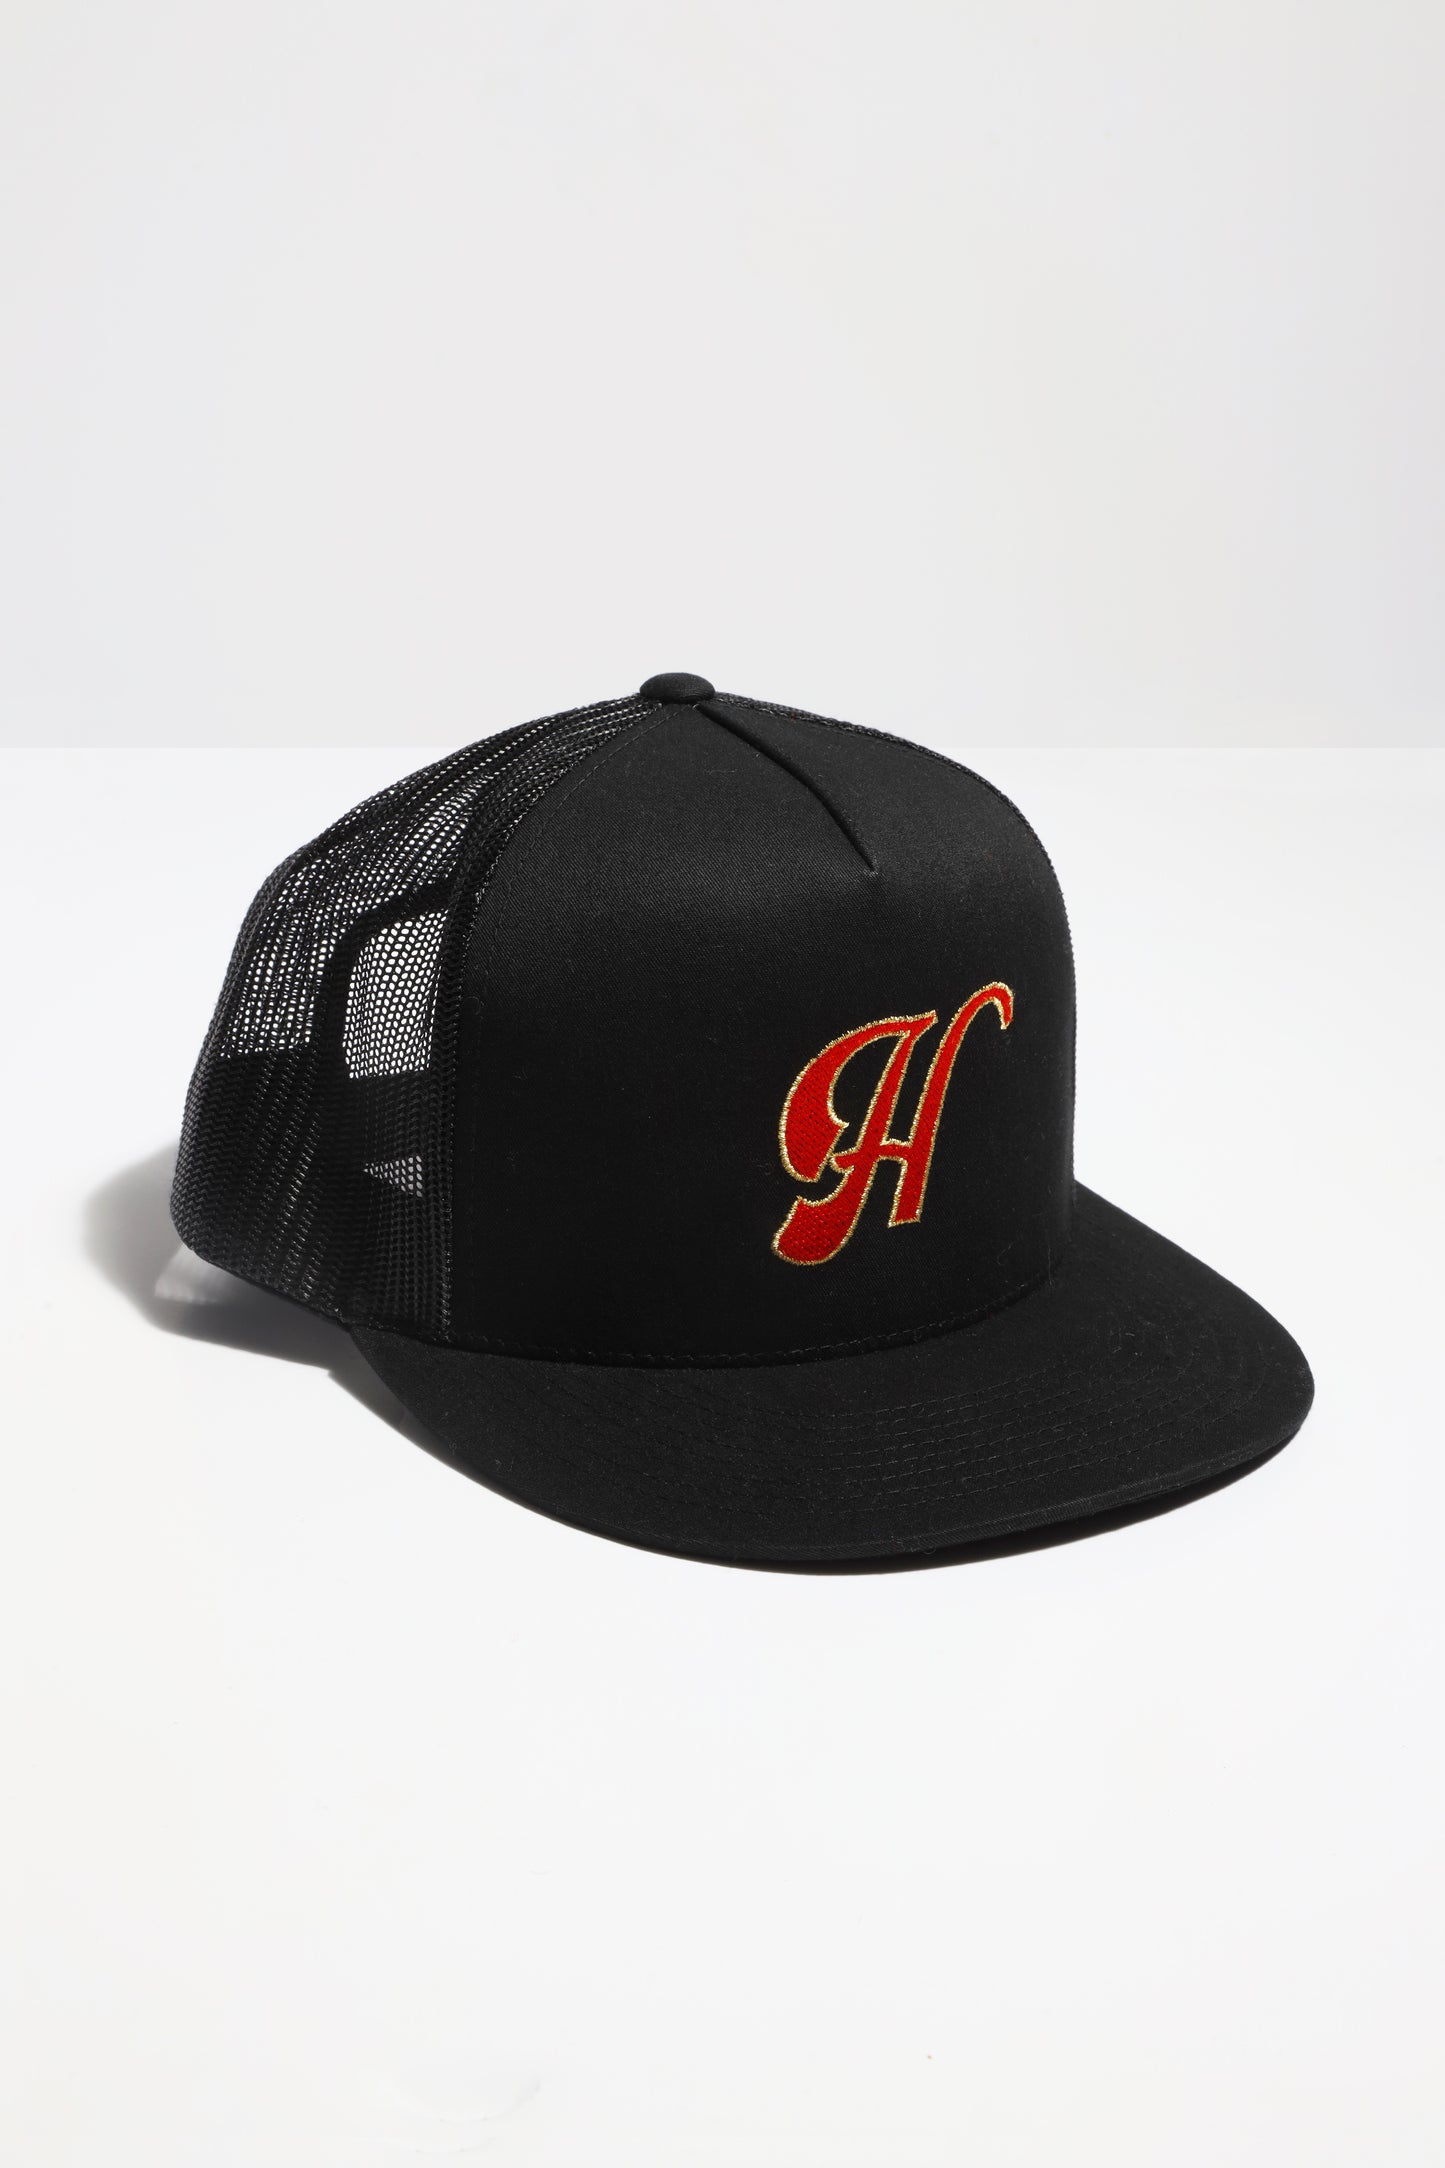 Trucker "H" Hat (Black)